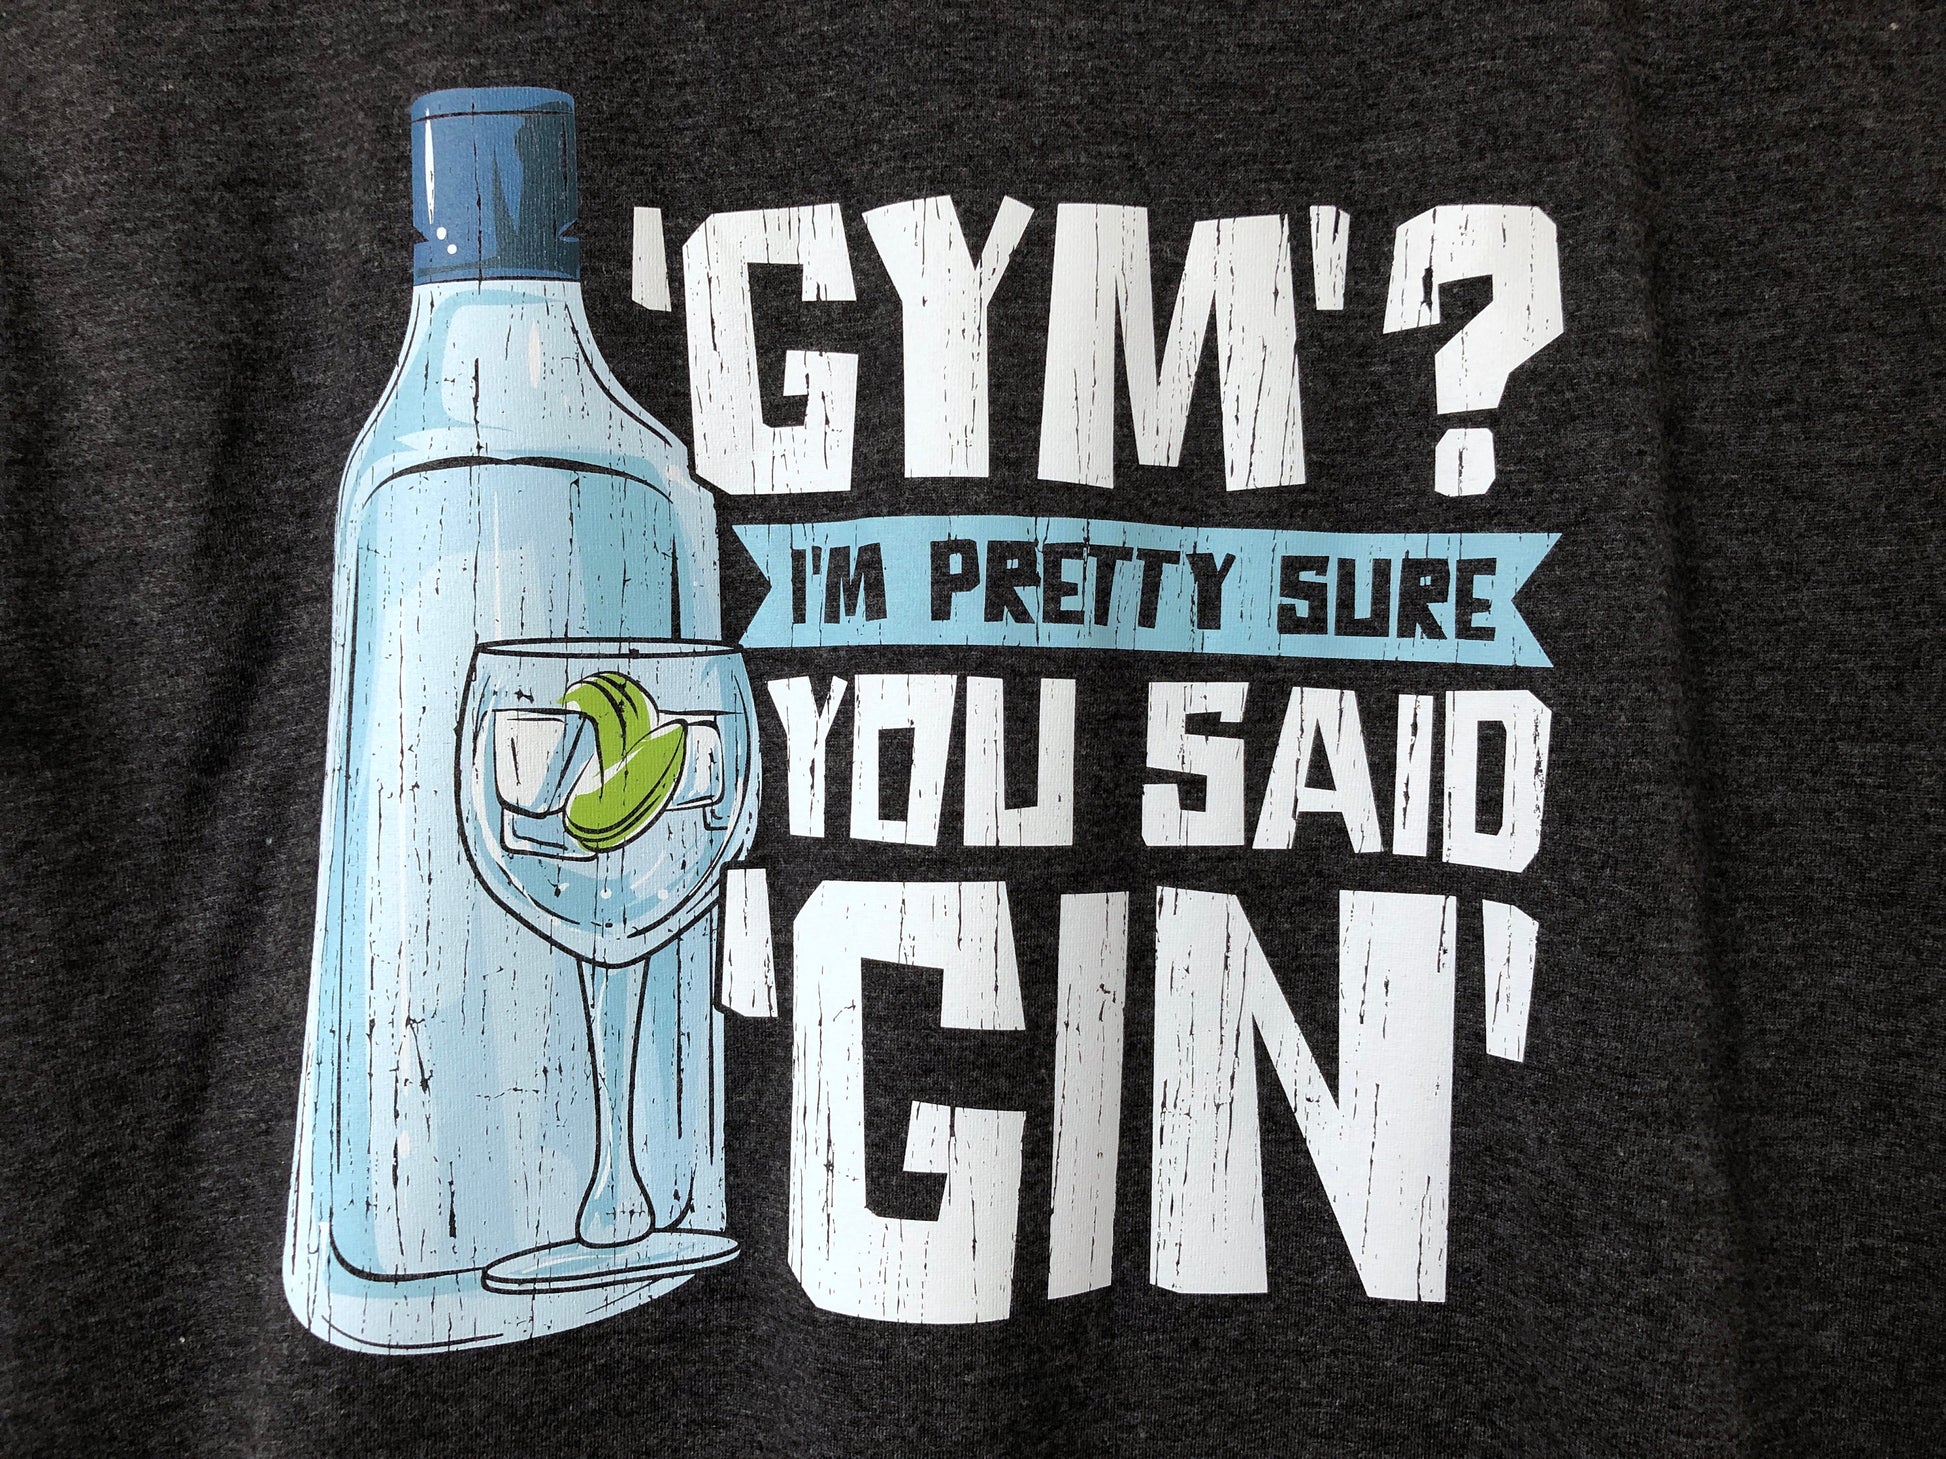 Gym Shirt for Gin Lovers T-Shirt, Gin and Tonic T-Shirt Design Gift Idea Tee Shirt T Top